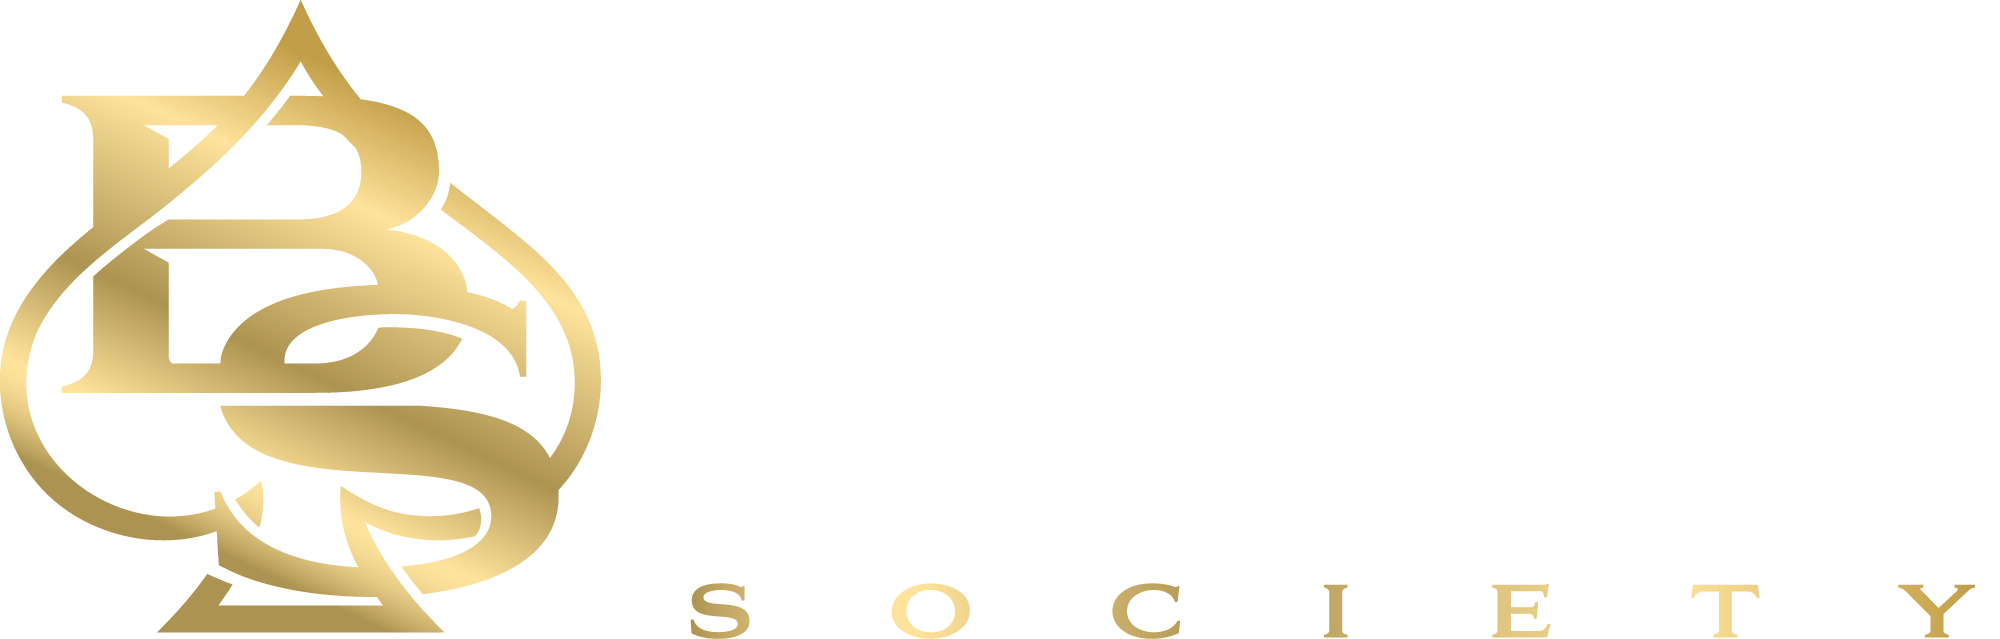 Black Spade Society